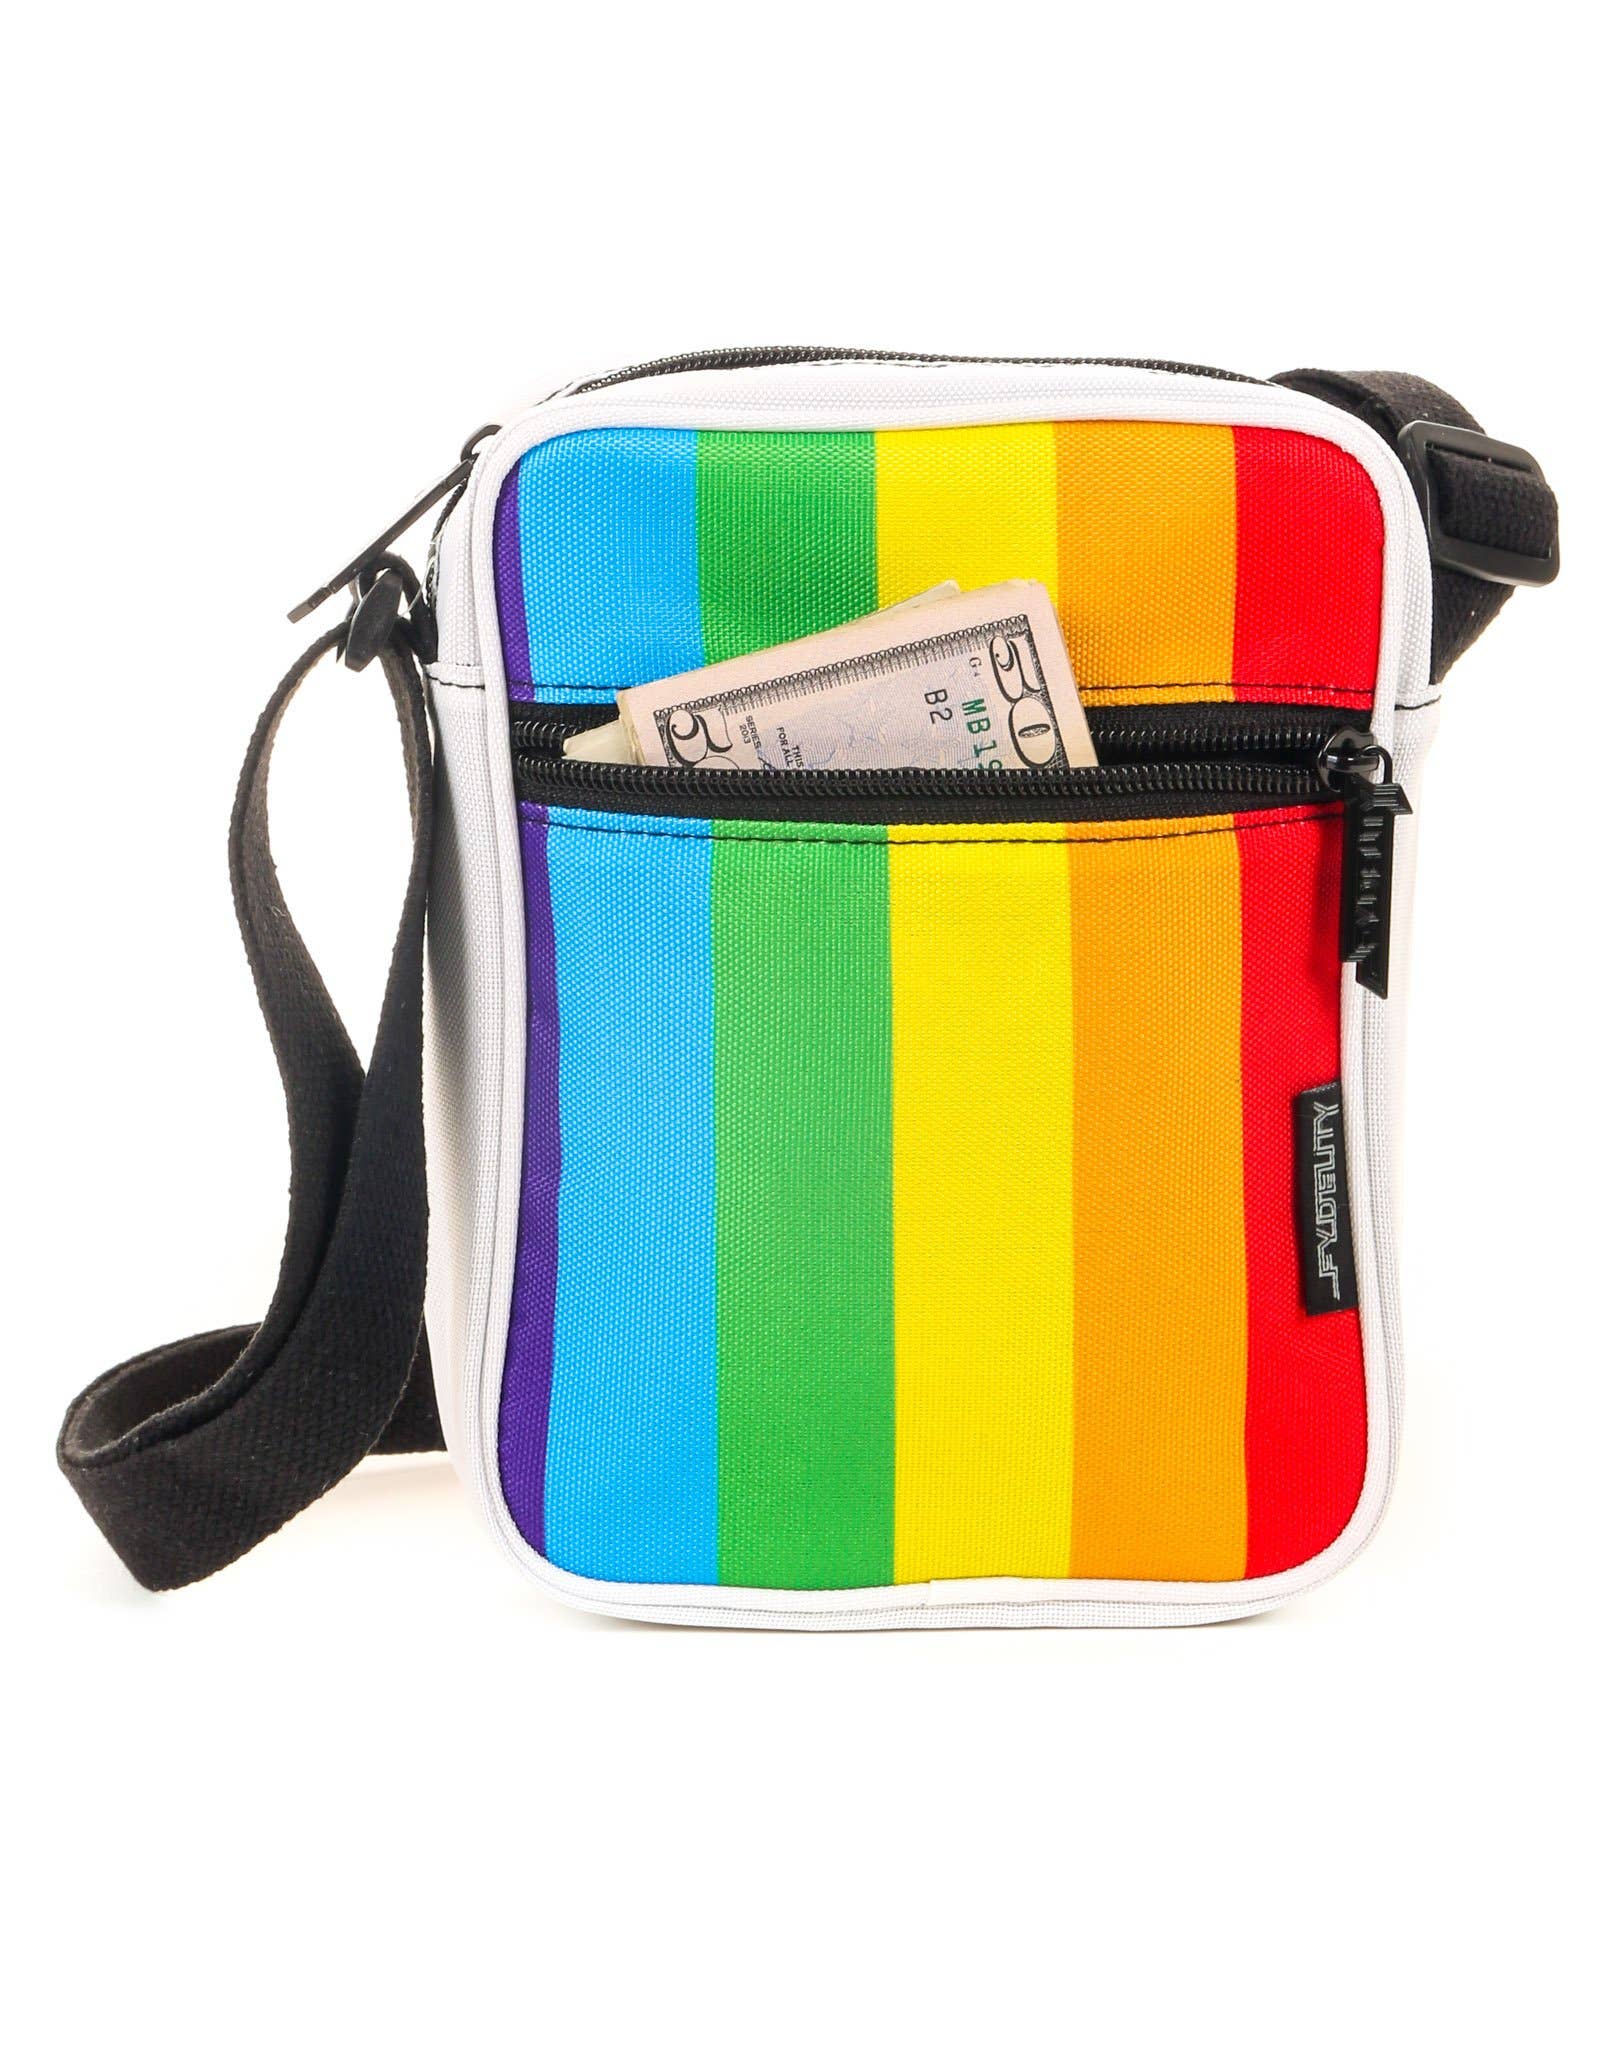 Sidekick |Festival Crossbody Sling Bag | Rainbow Stripe